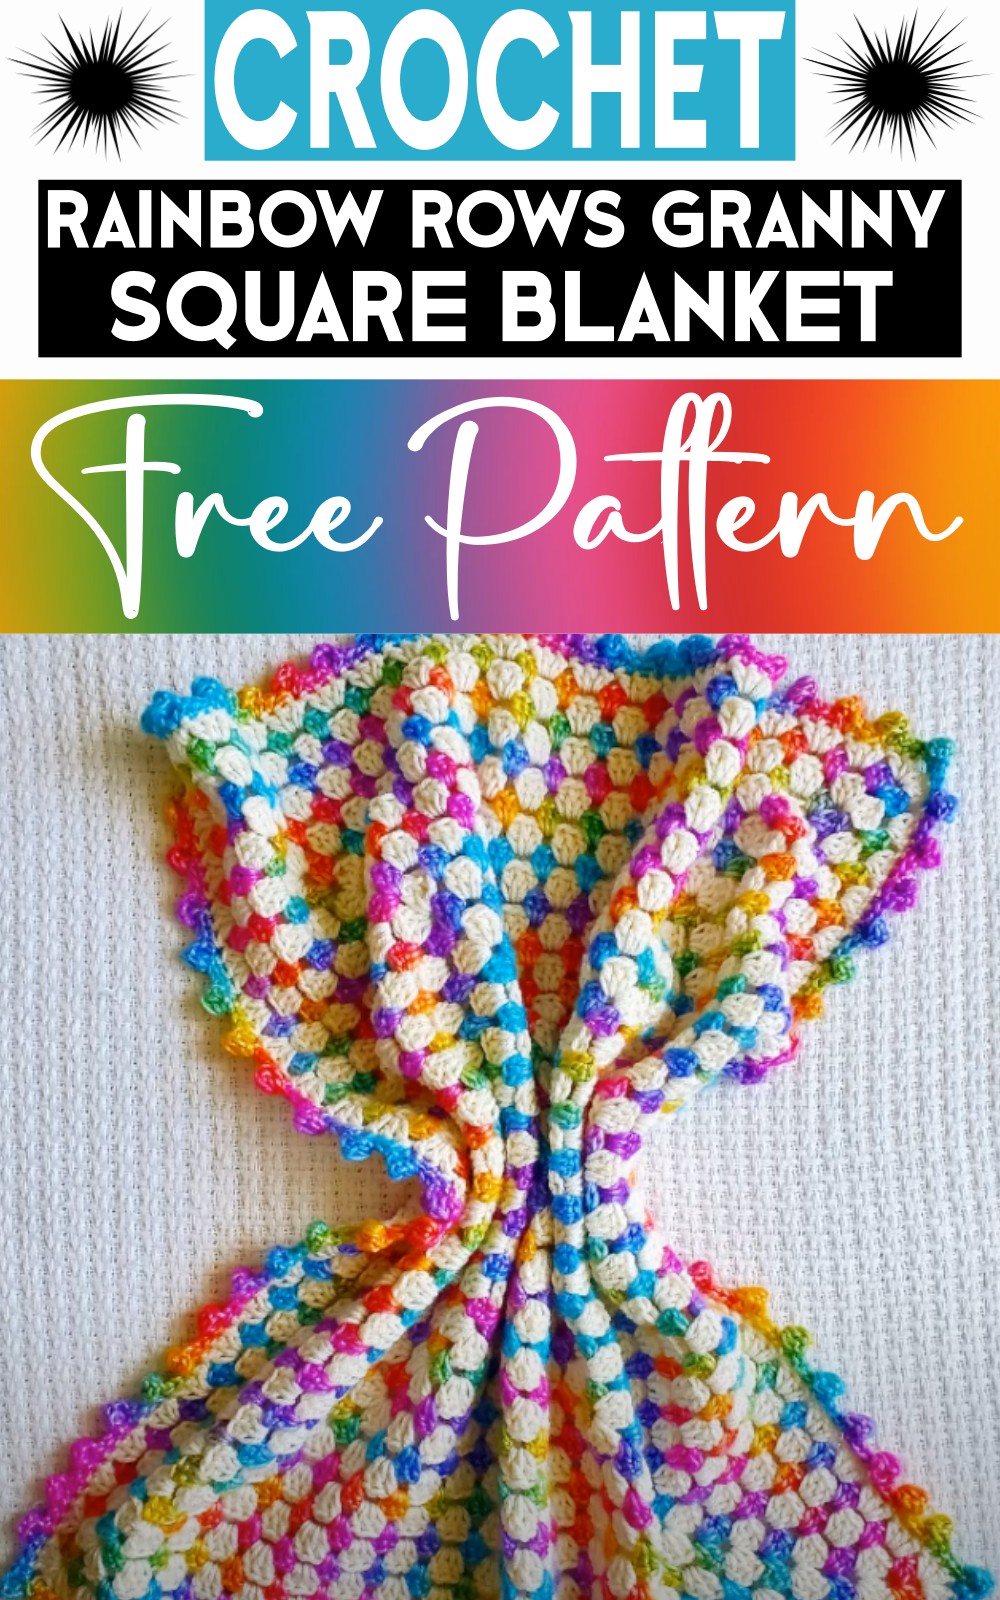 Crochet Rainbow Rows Granny Square Blanket